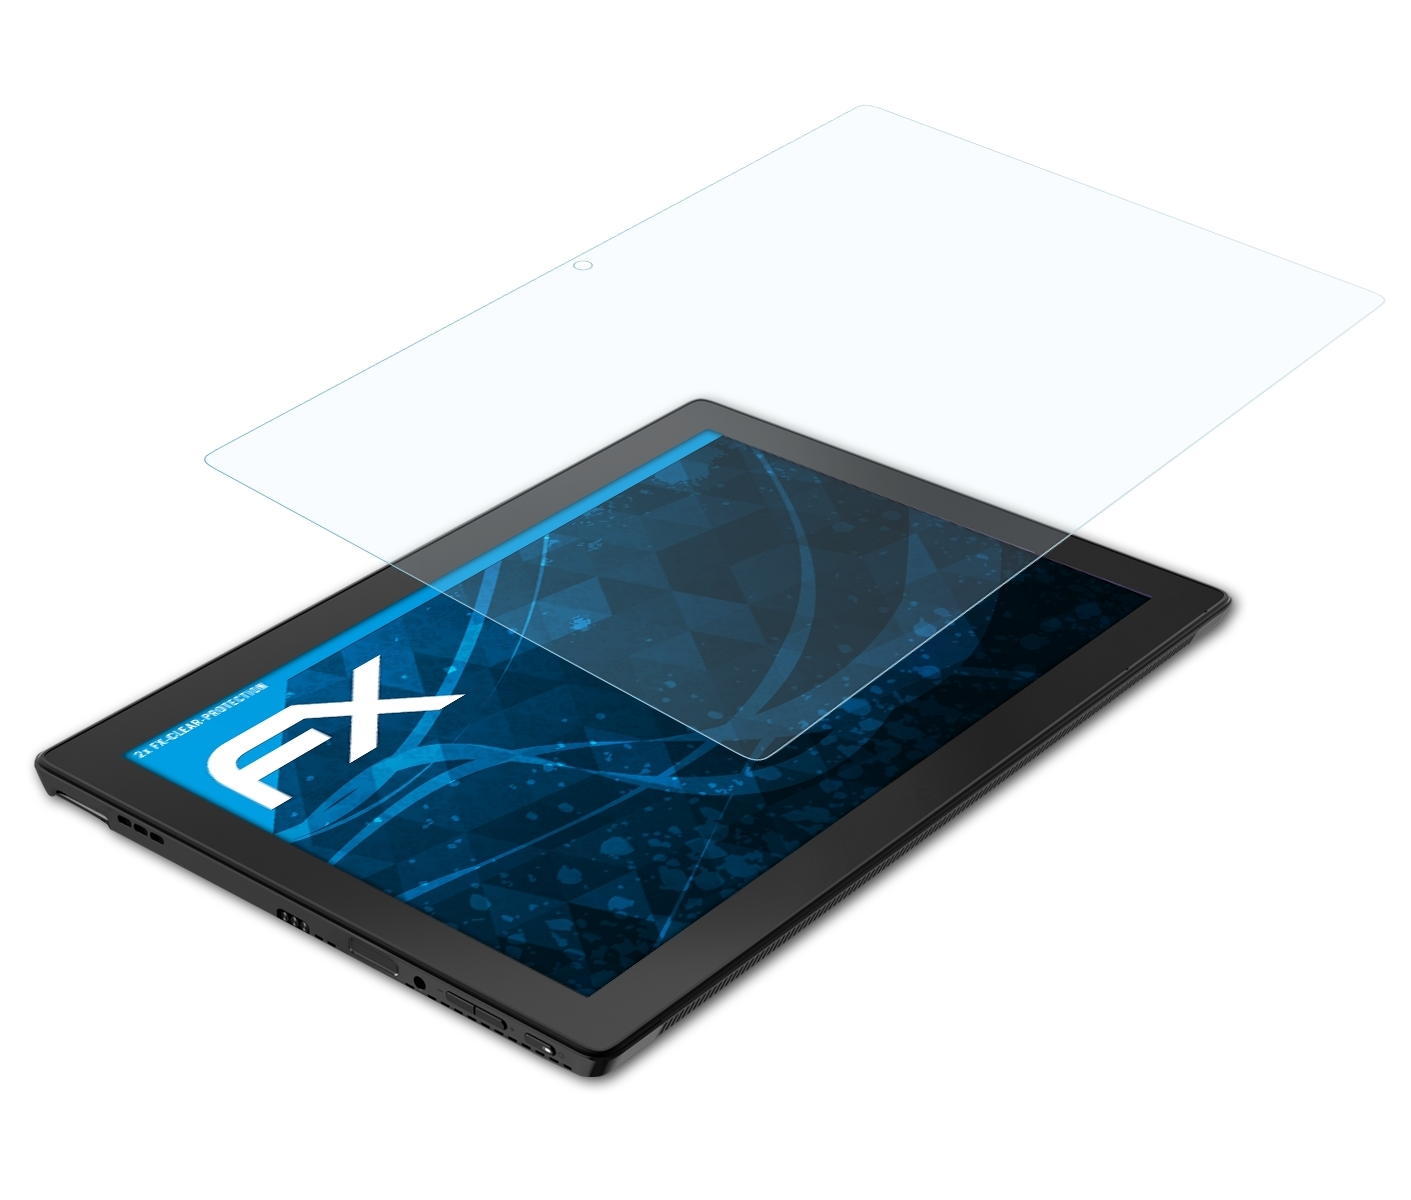 Lenovo Miix Displayschutz(für FX-Clear 520) ATFOLIX 2x